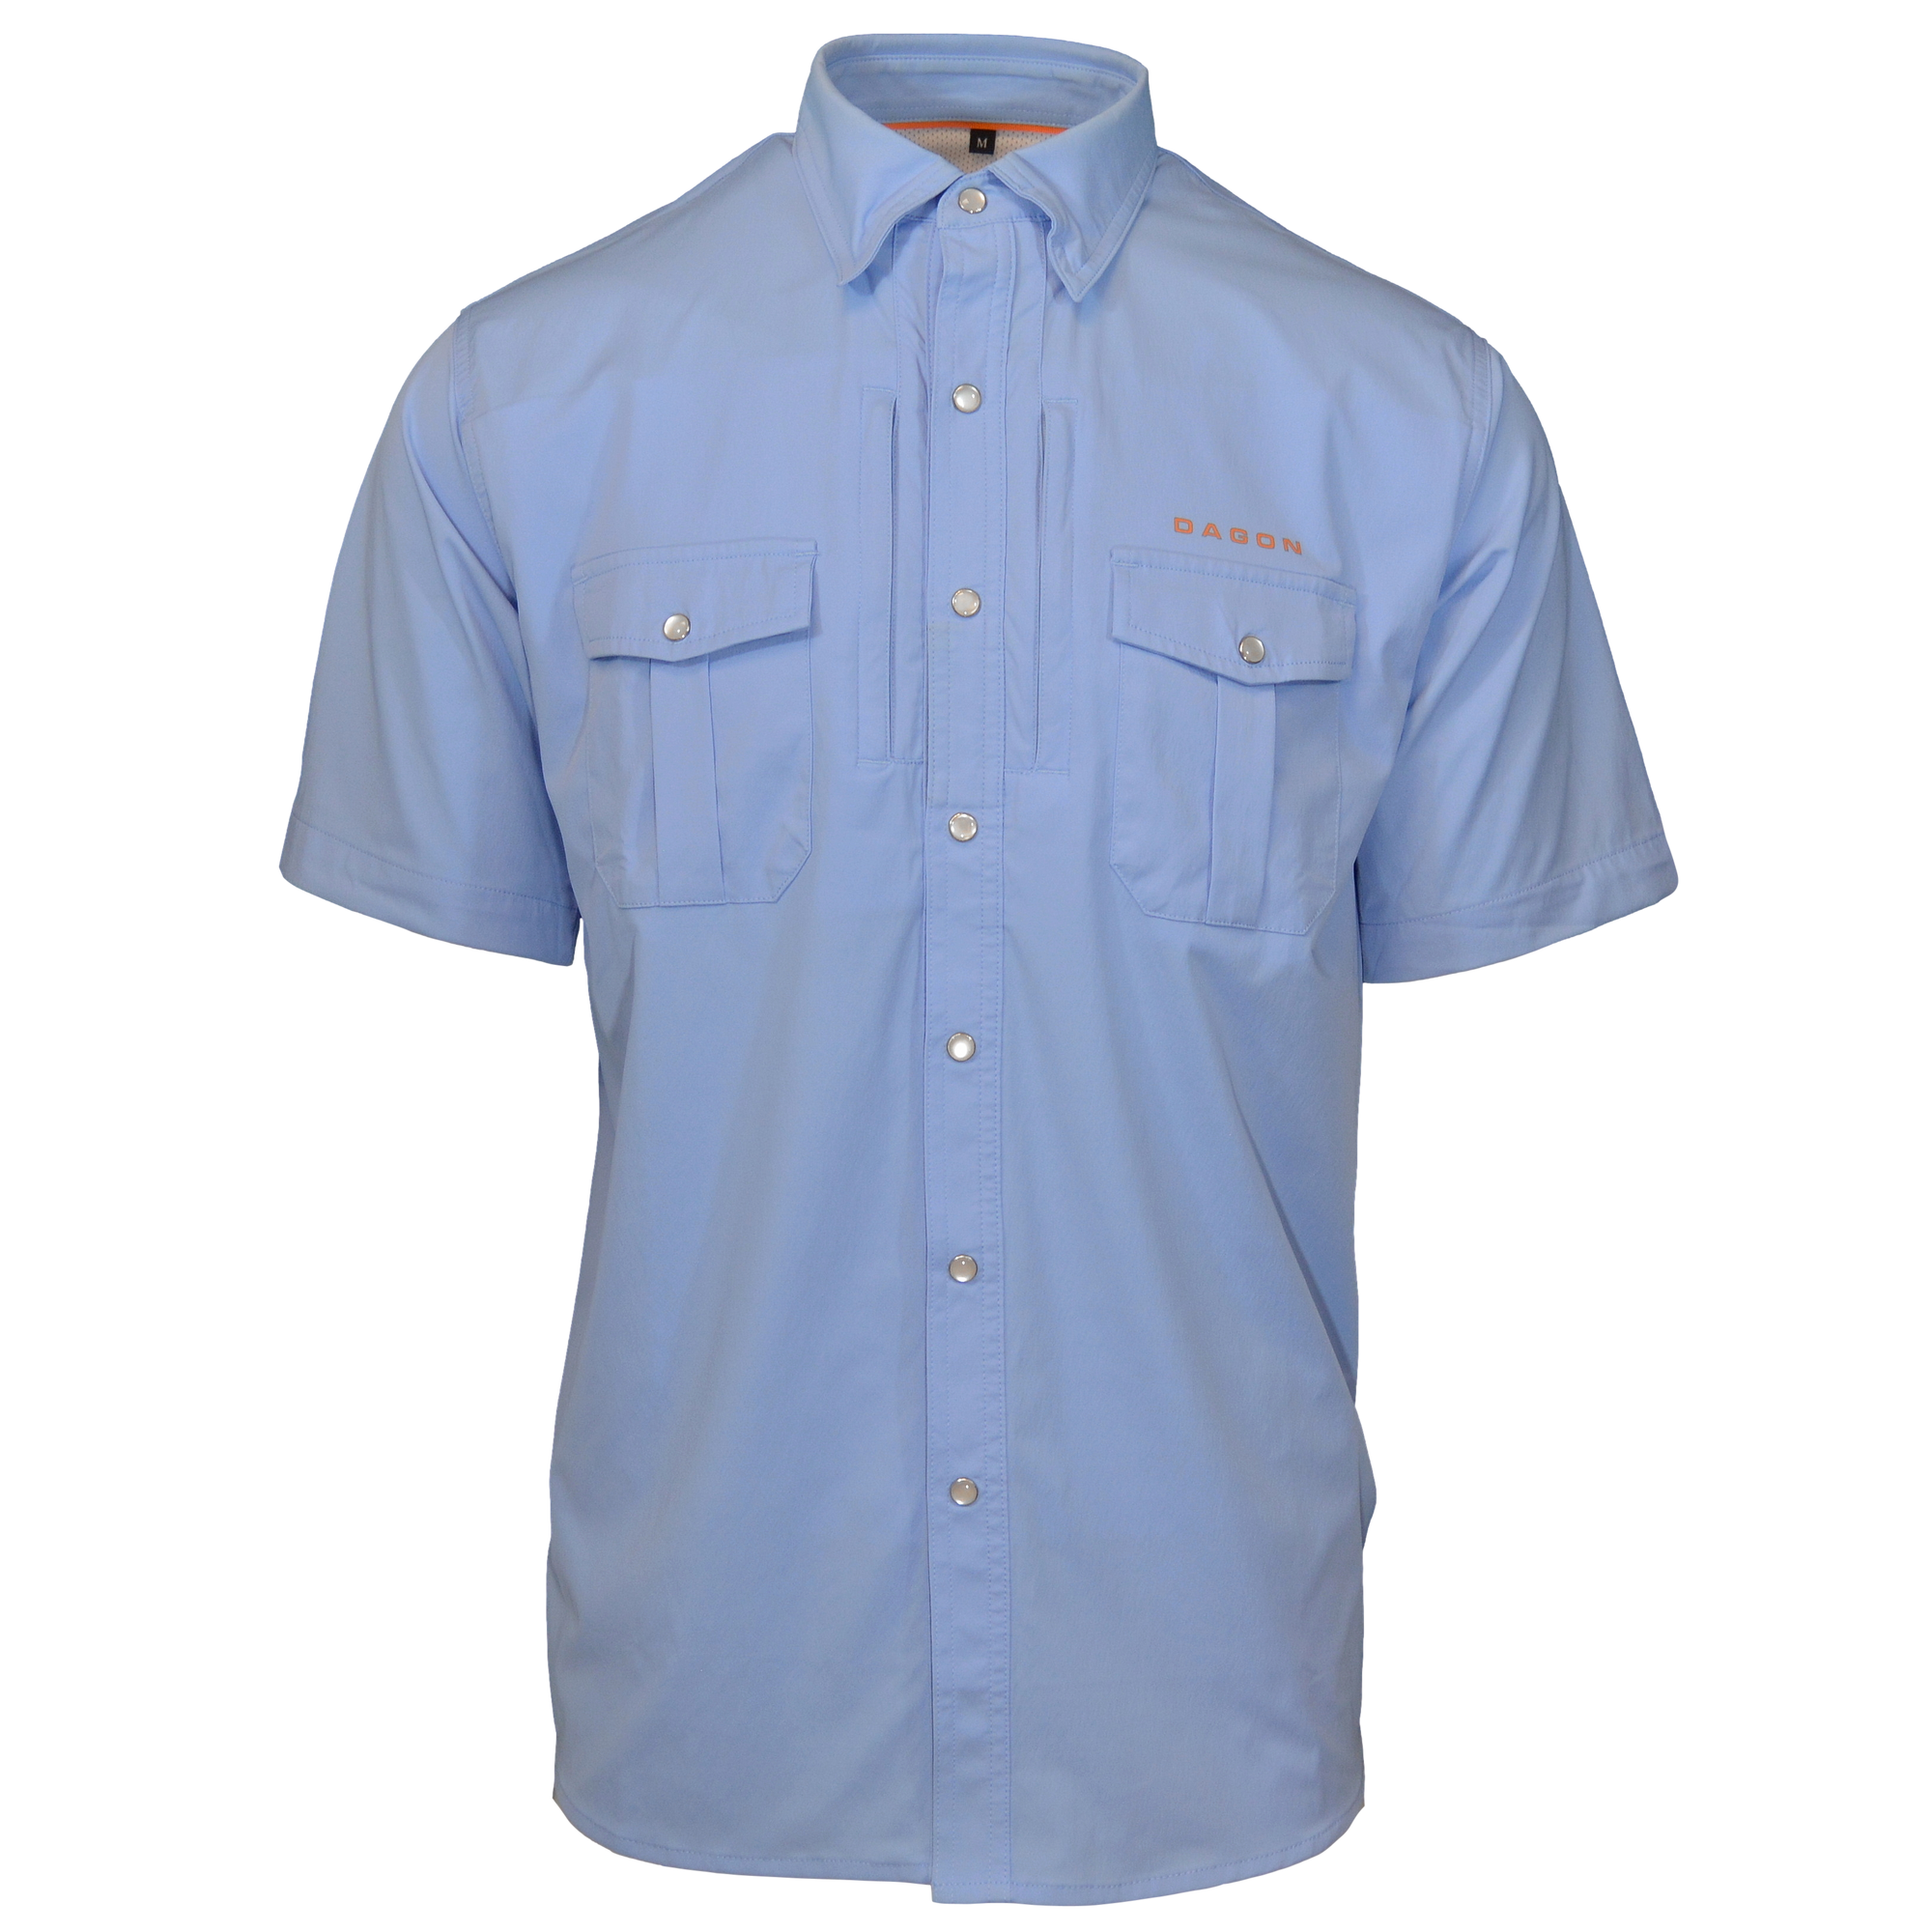 New Artwork] Tarpon Fish Fishing Shirts for Men Small/Columbia Blue